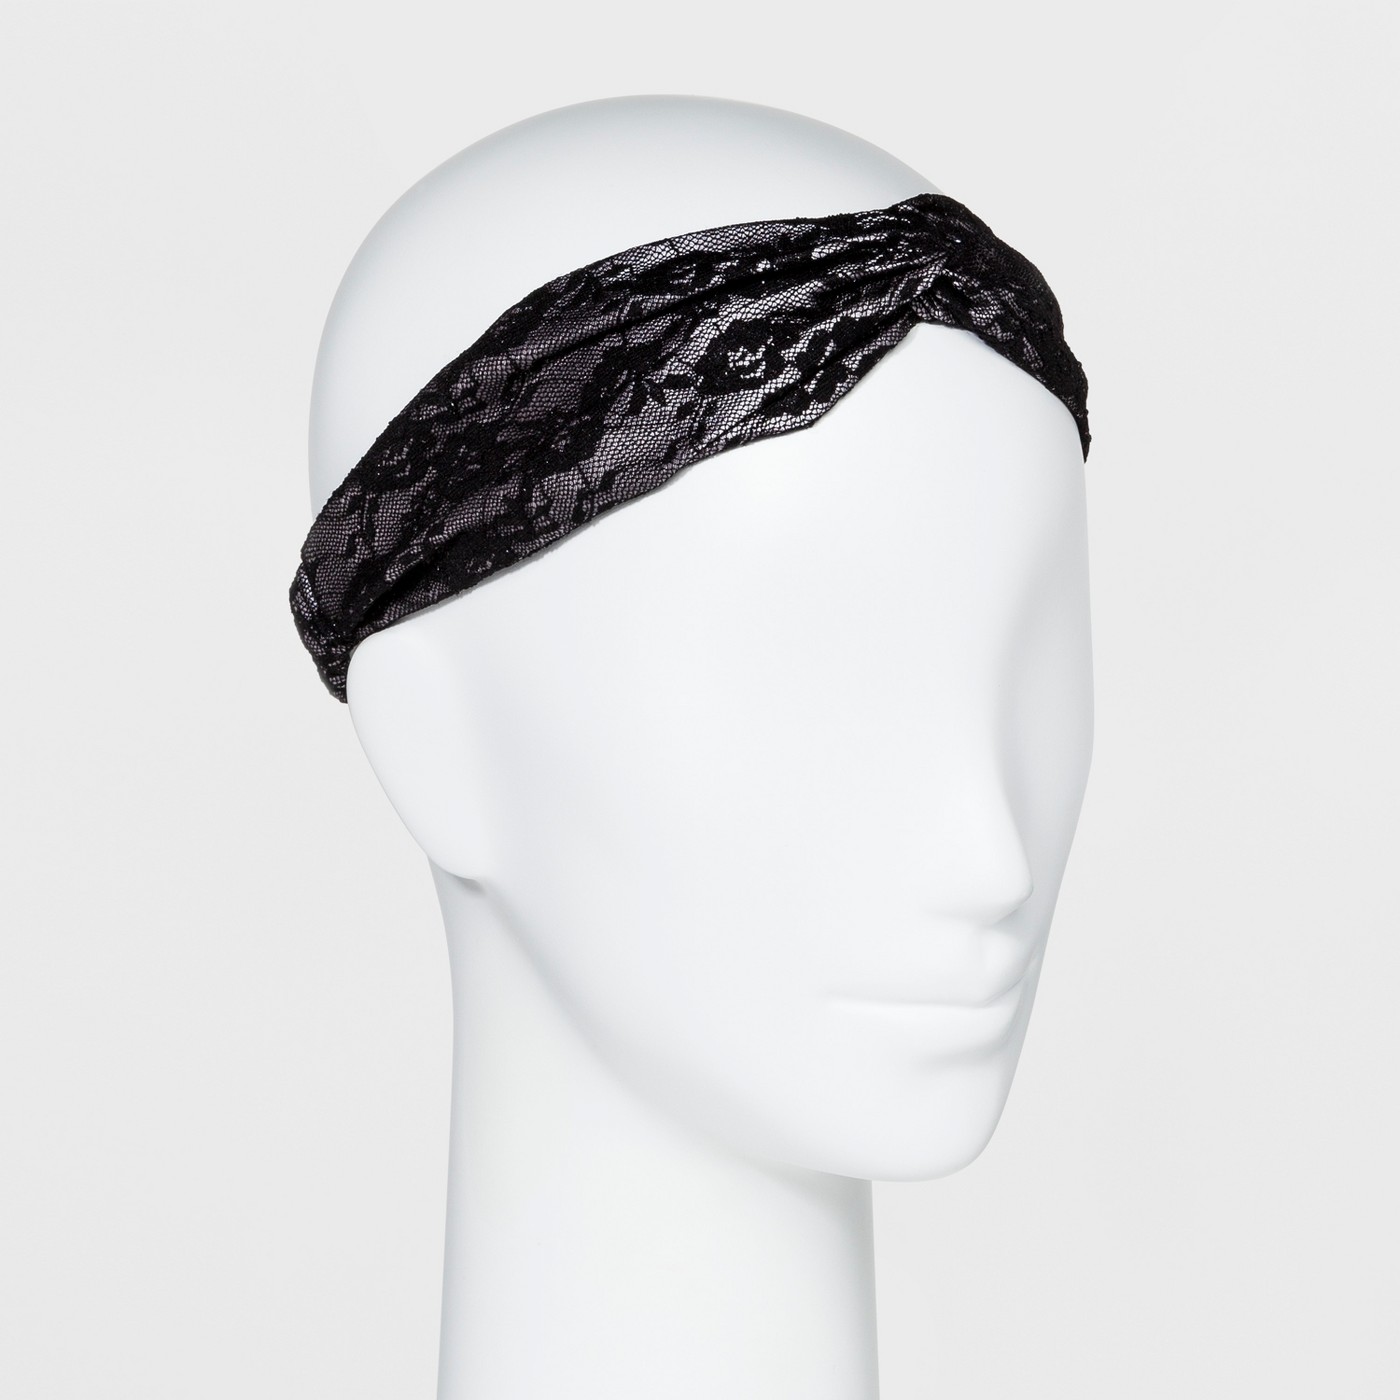 Fashion Headwrap Lace - Black - image 1 of 2